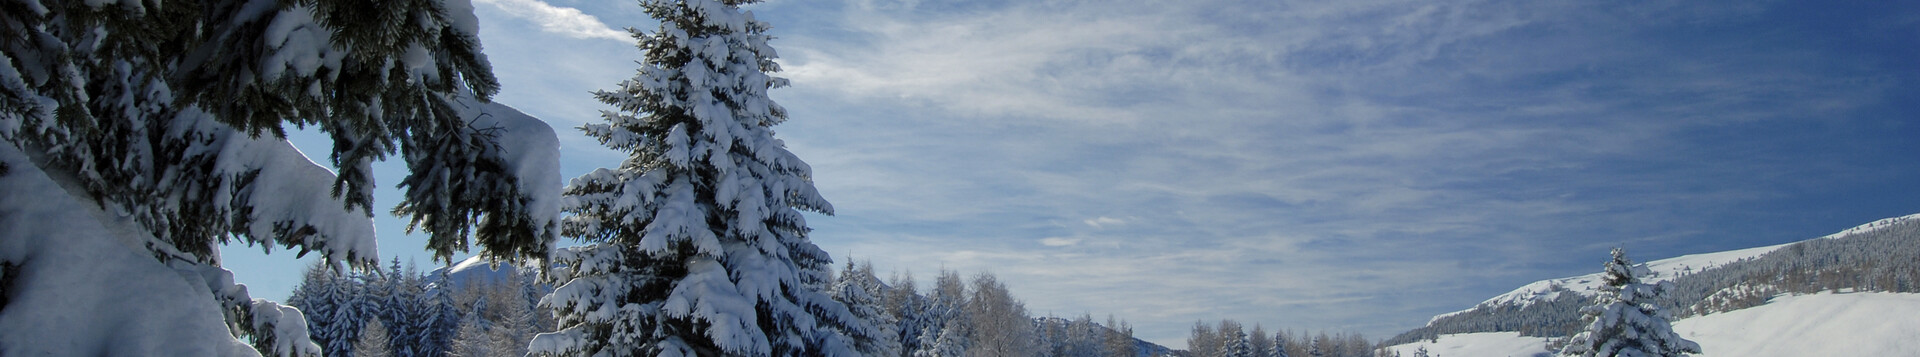 Снежная сказка в пригороде Тренто | © 22453-monte-bondone-inverno-giovanni-cavulli